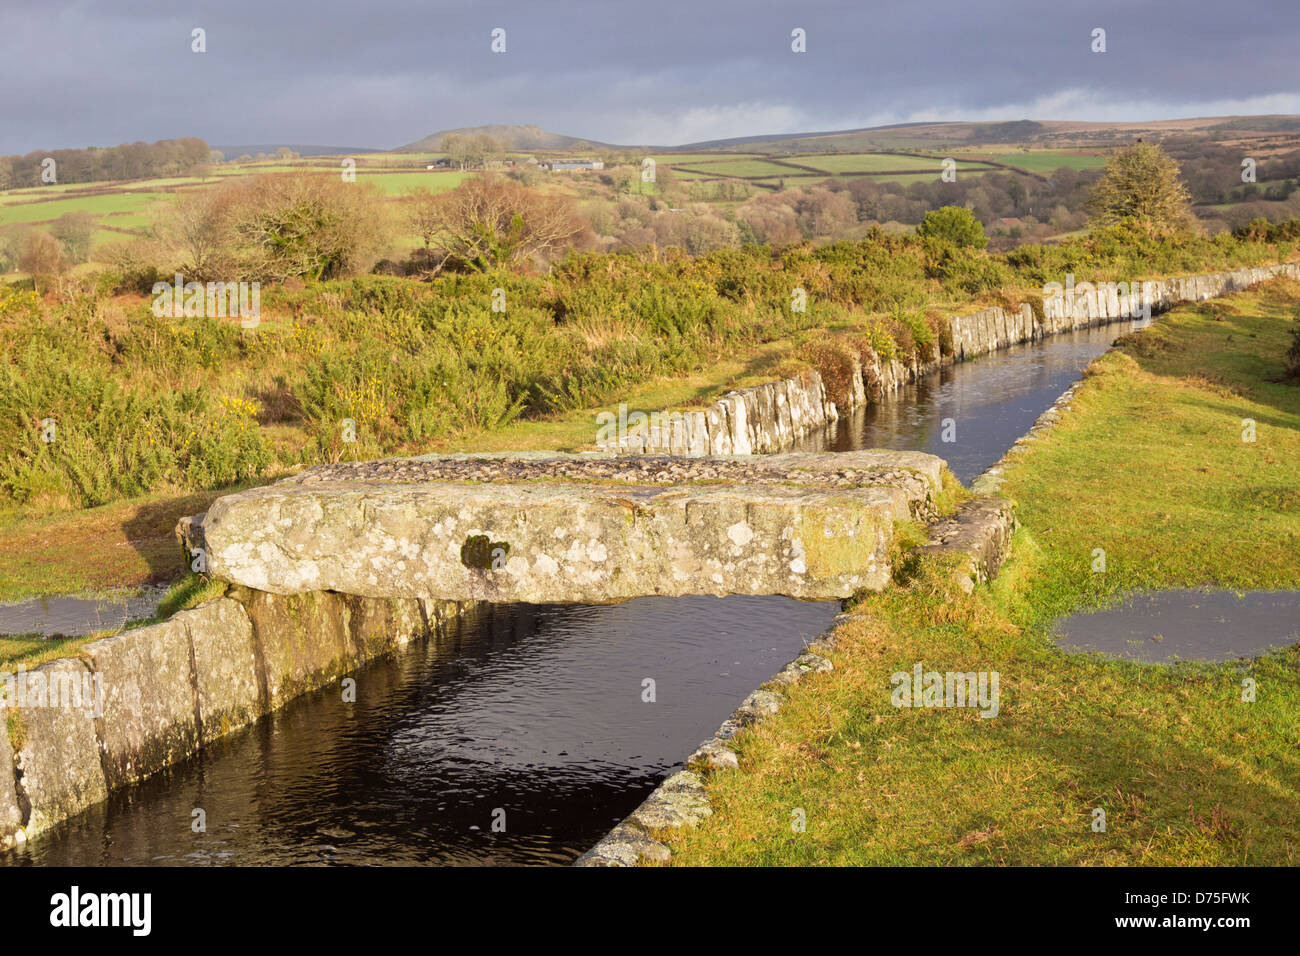 Granite stone forming bridge across manmade leat on Dartmoor, Devon UK Stock Photo